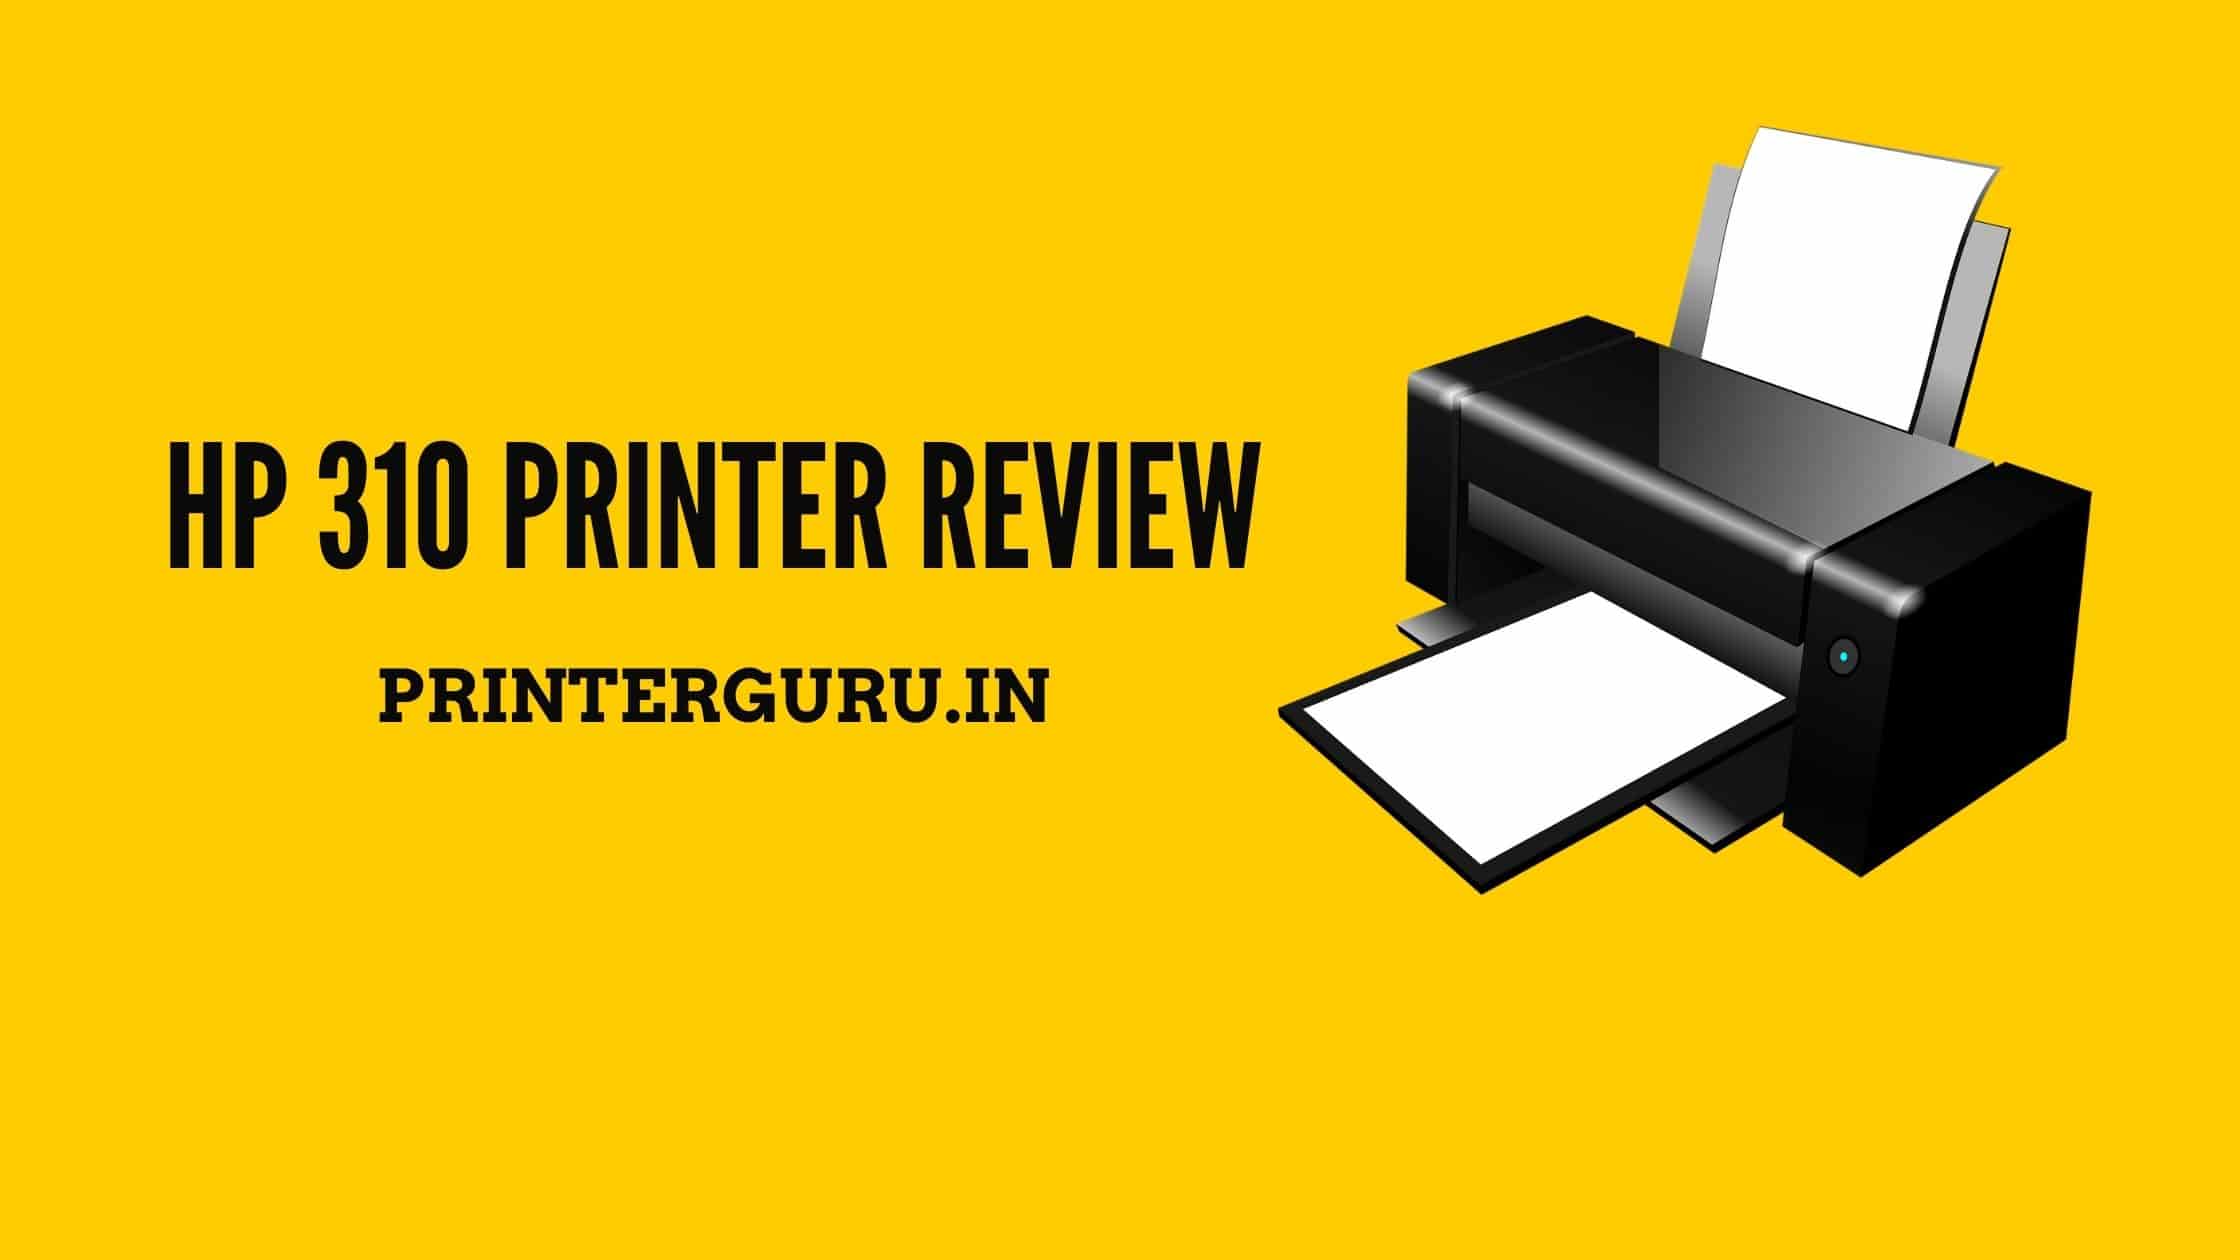 HP 310 Printer Review